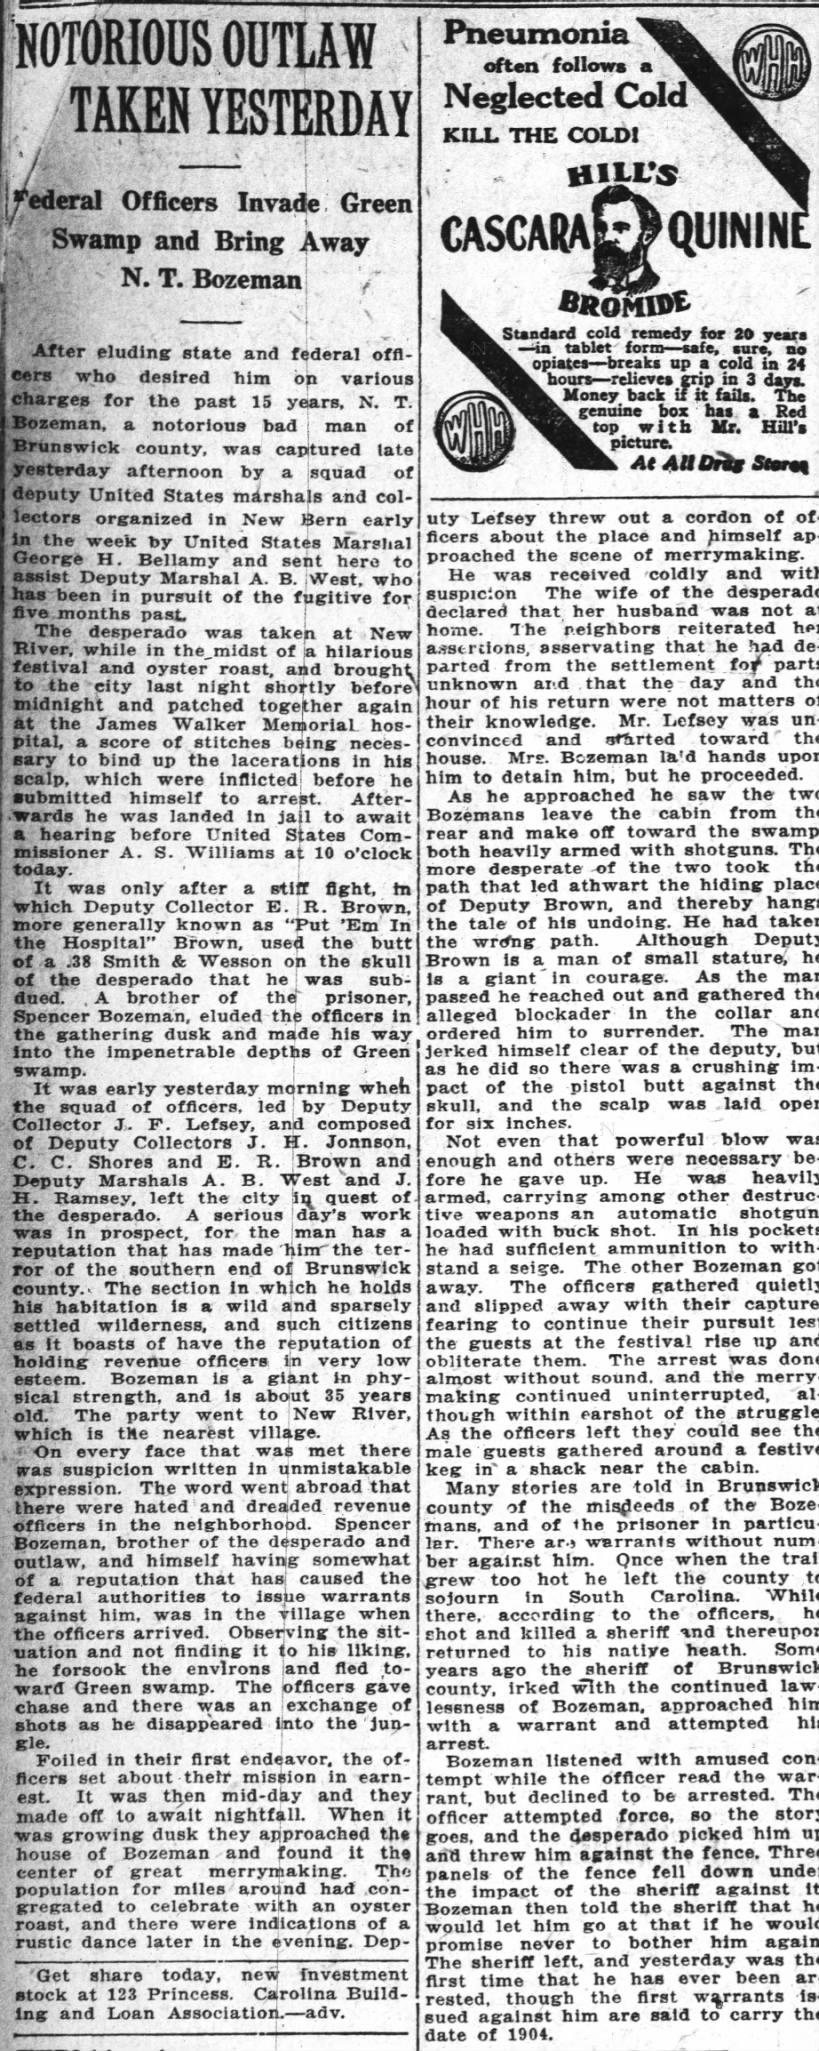 Wilmington Morning Star 8 Nov 1919 Outlaw N.T. Bozeman captured